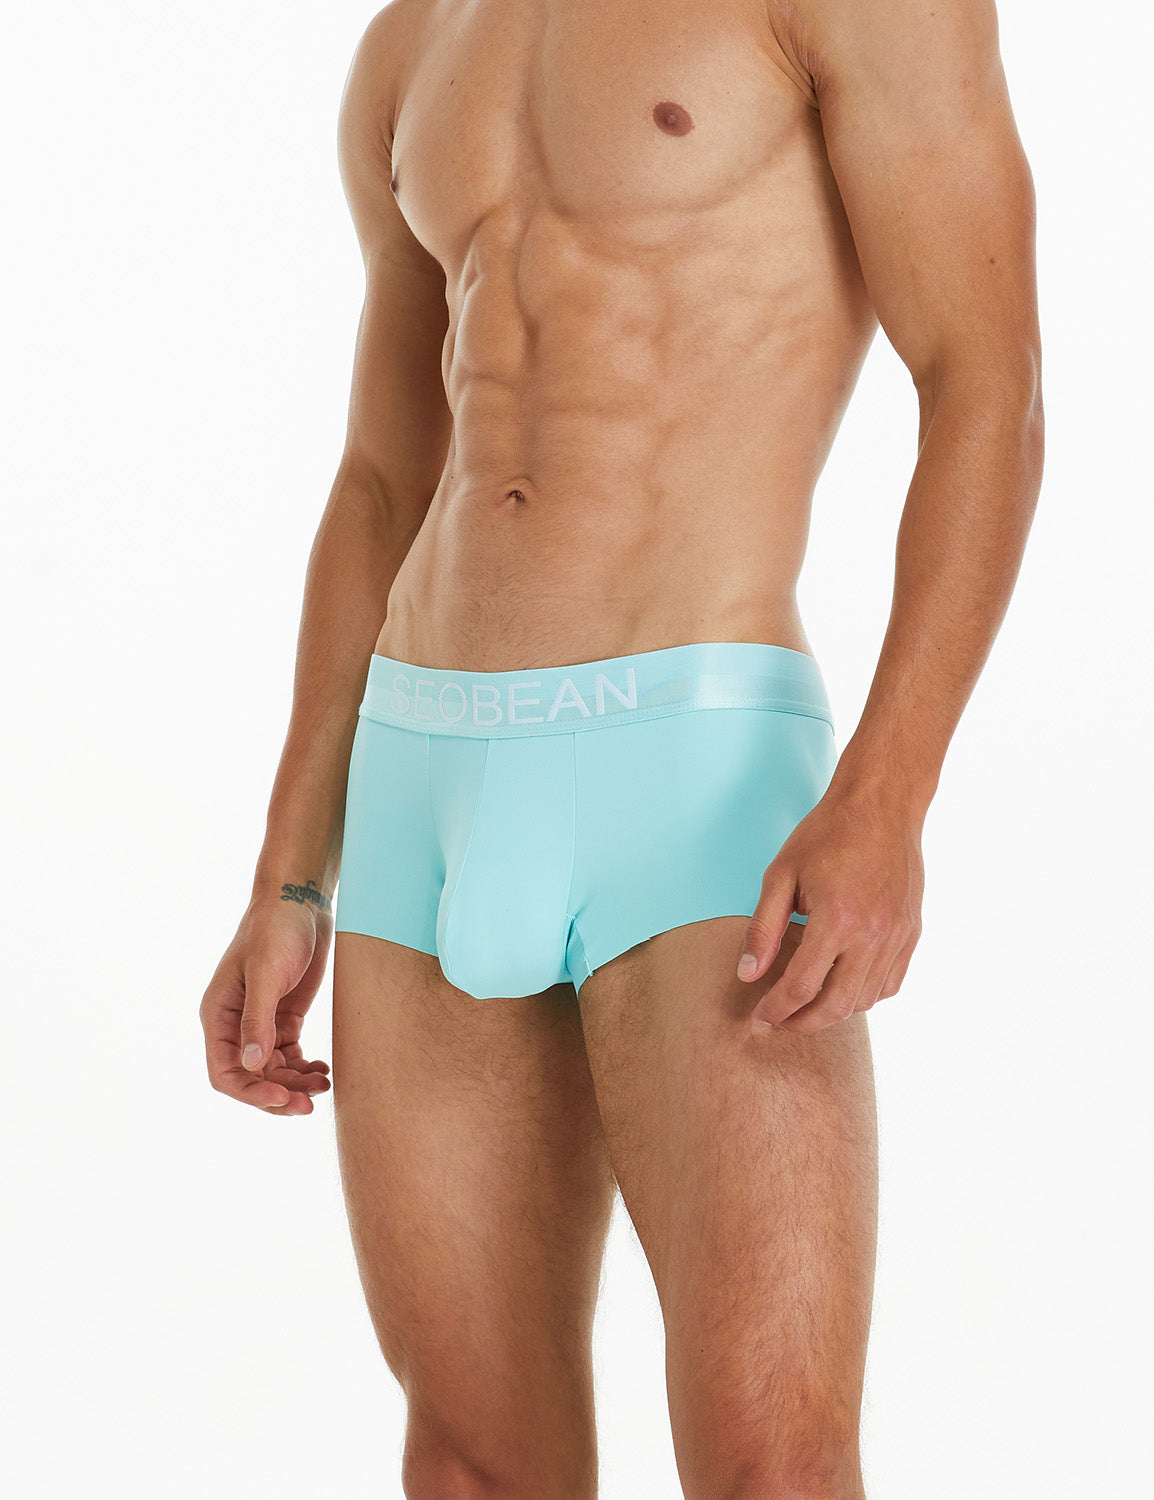 Men's Seamless Brief Boxer Underwear_Nylon - Wholesale 